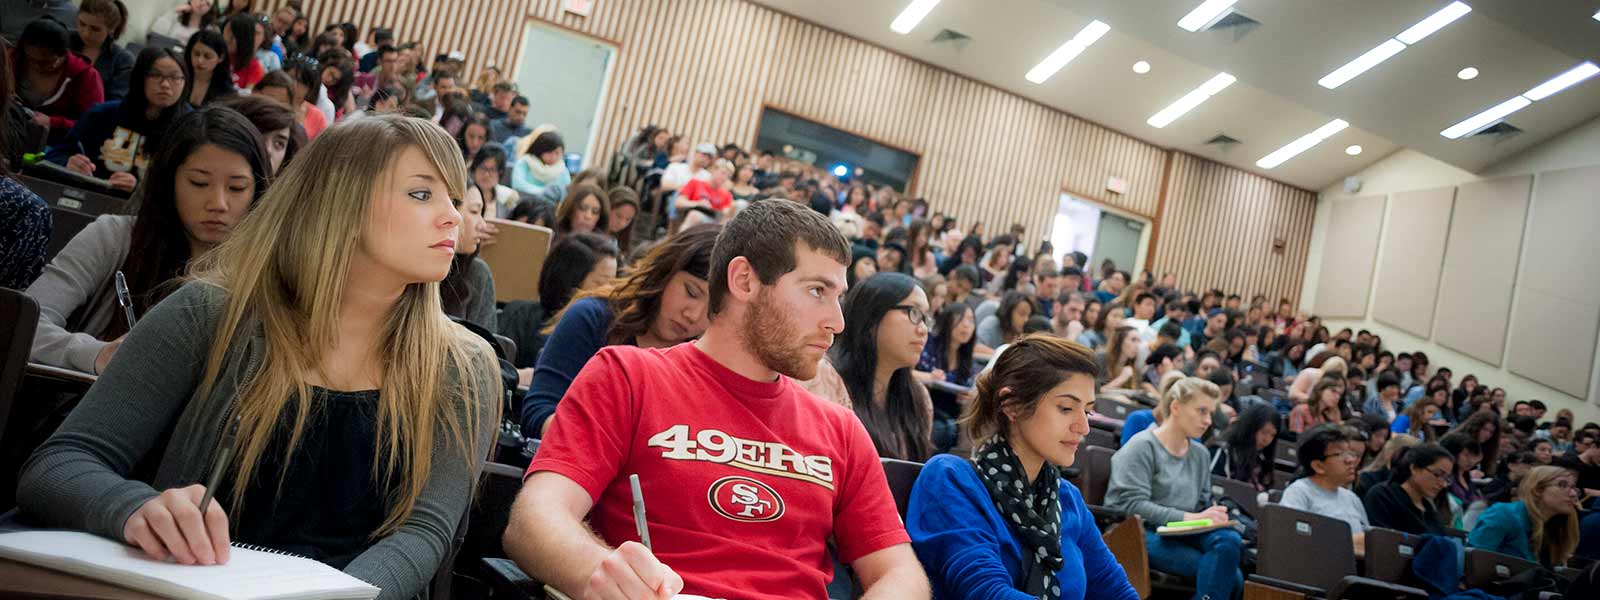 UC San Diego undergraduate students in class